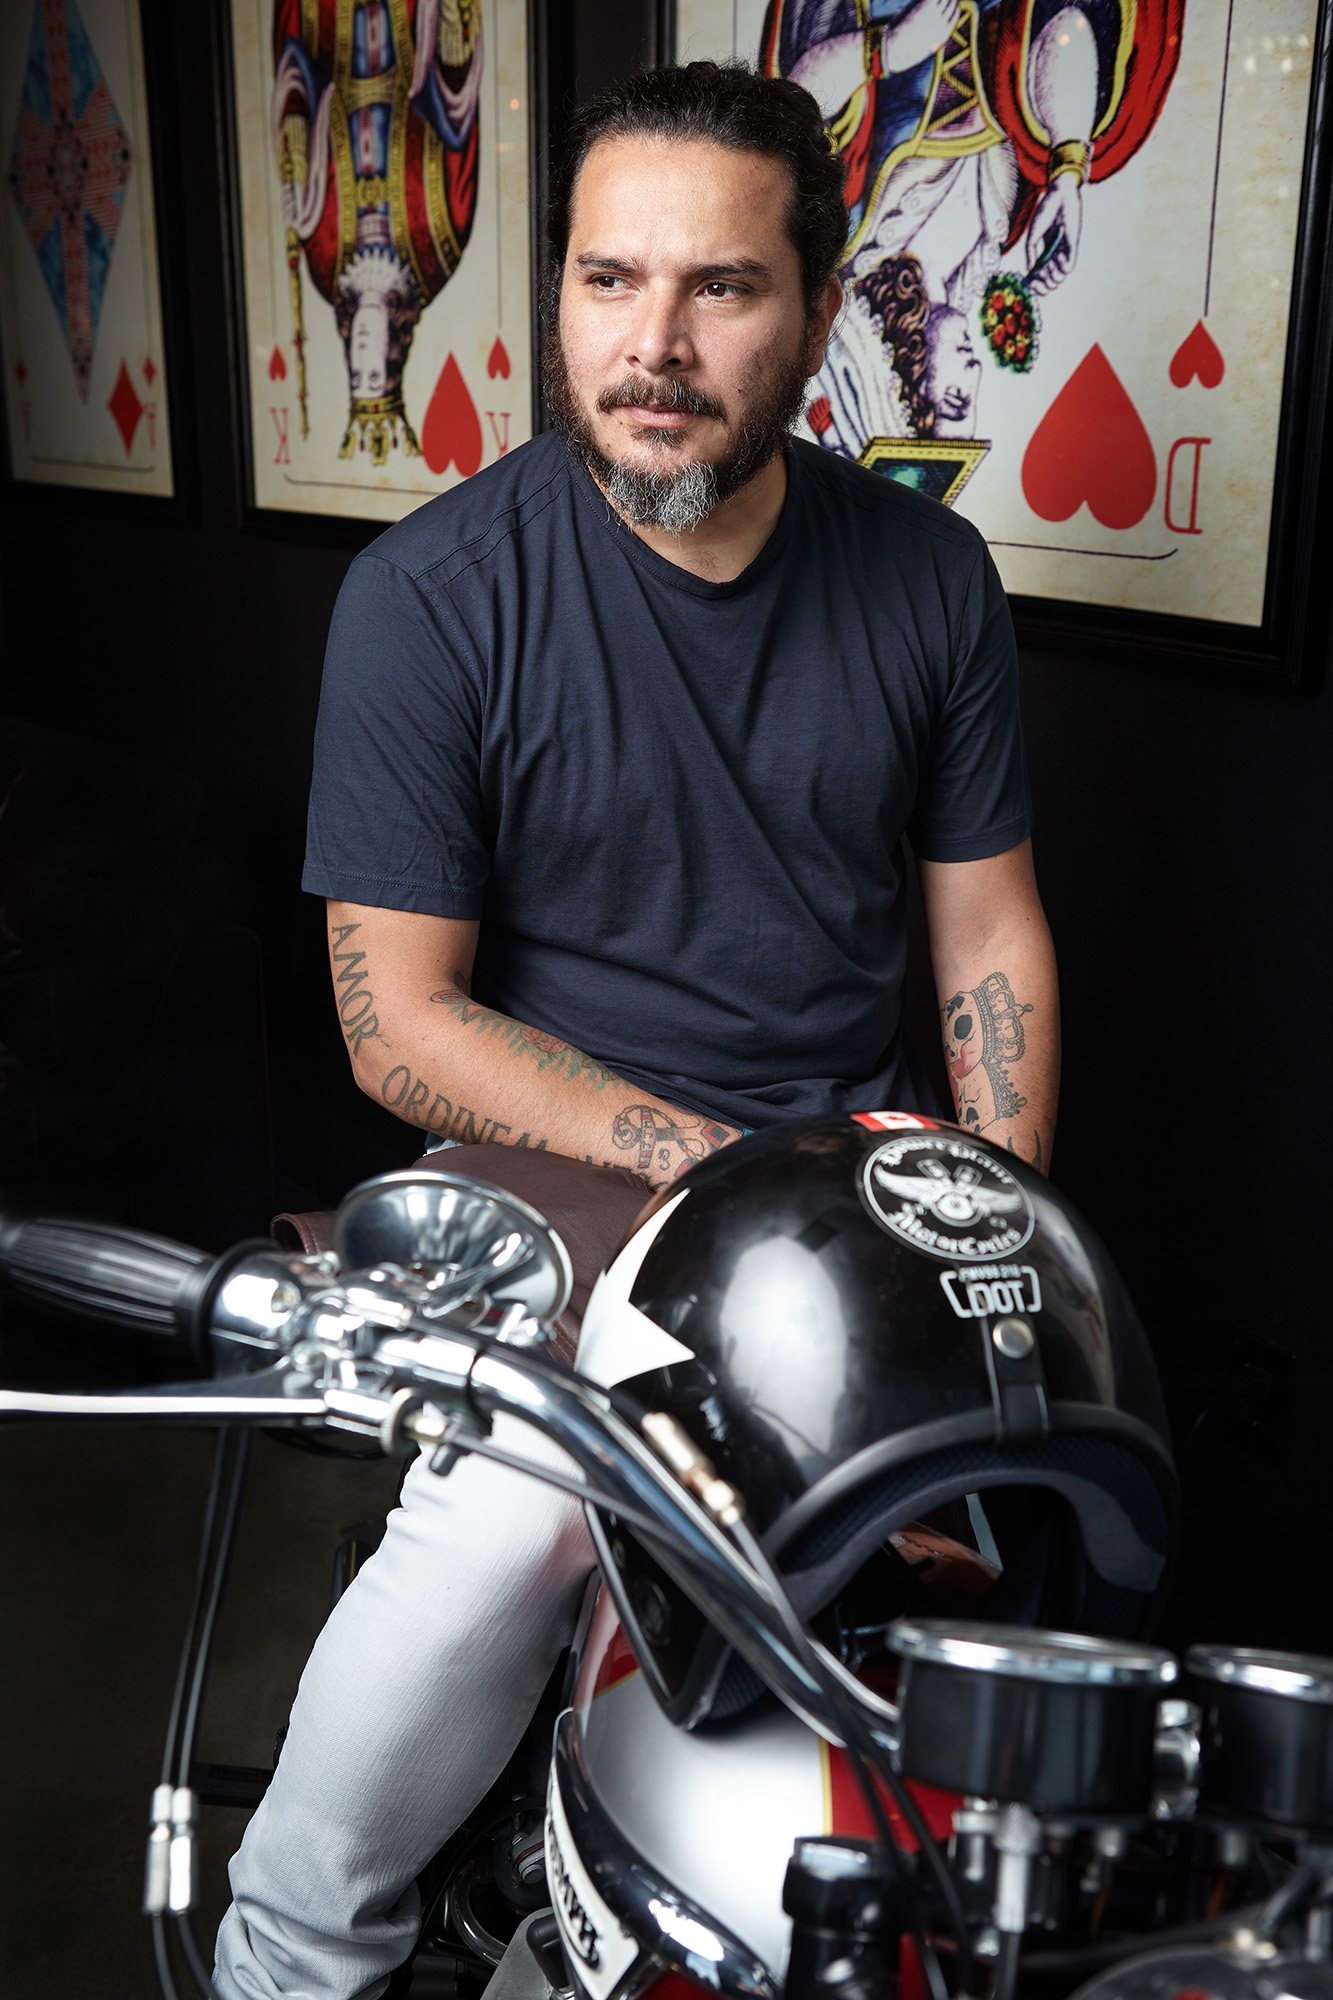 Martín Majano on motorcycle